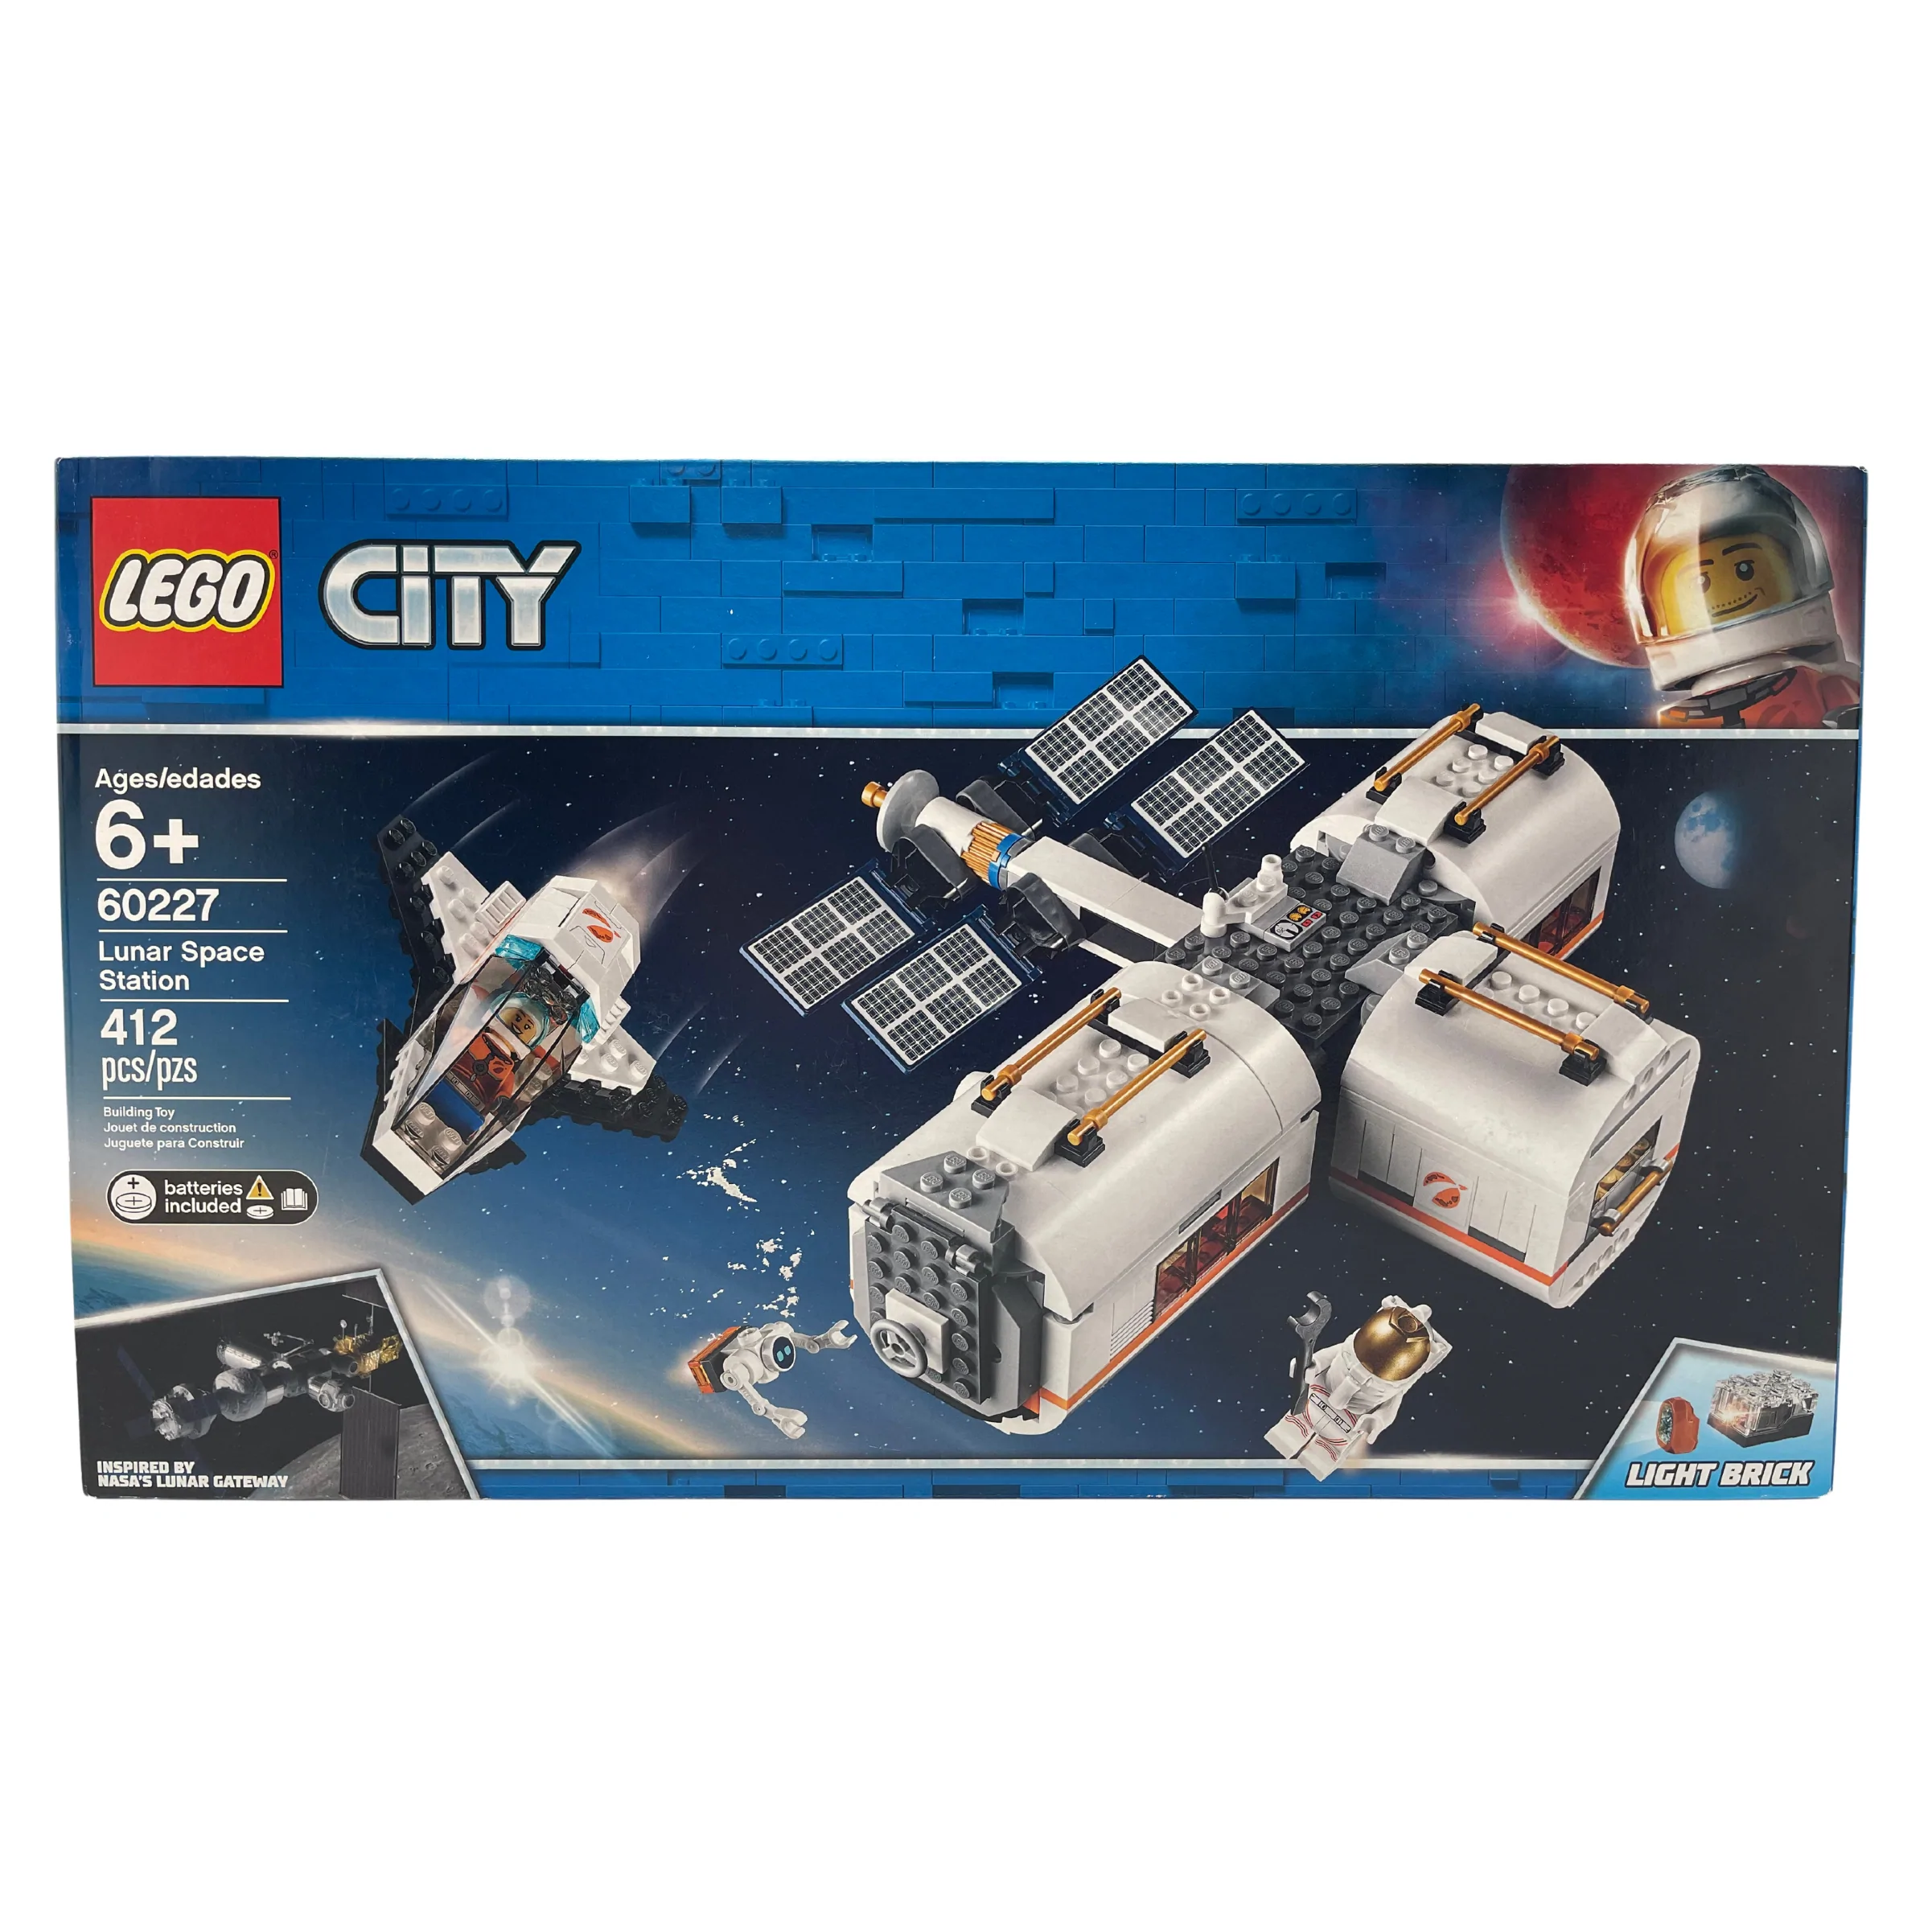 Lego City Lunar Space Station Building Set / Light-Up Brick / 60227 / 412 Pieces **DEALS**